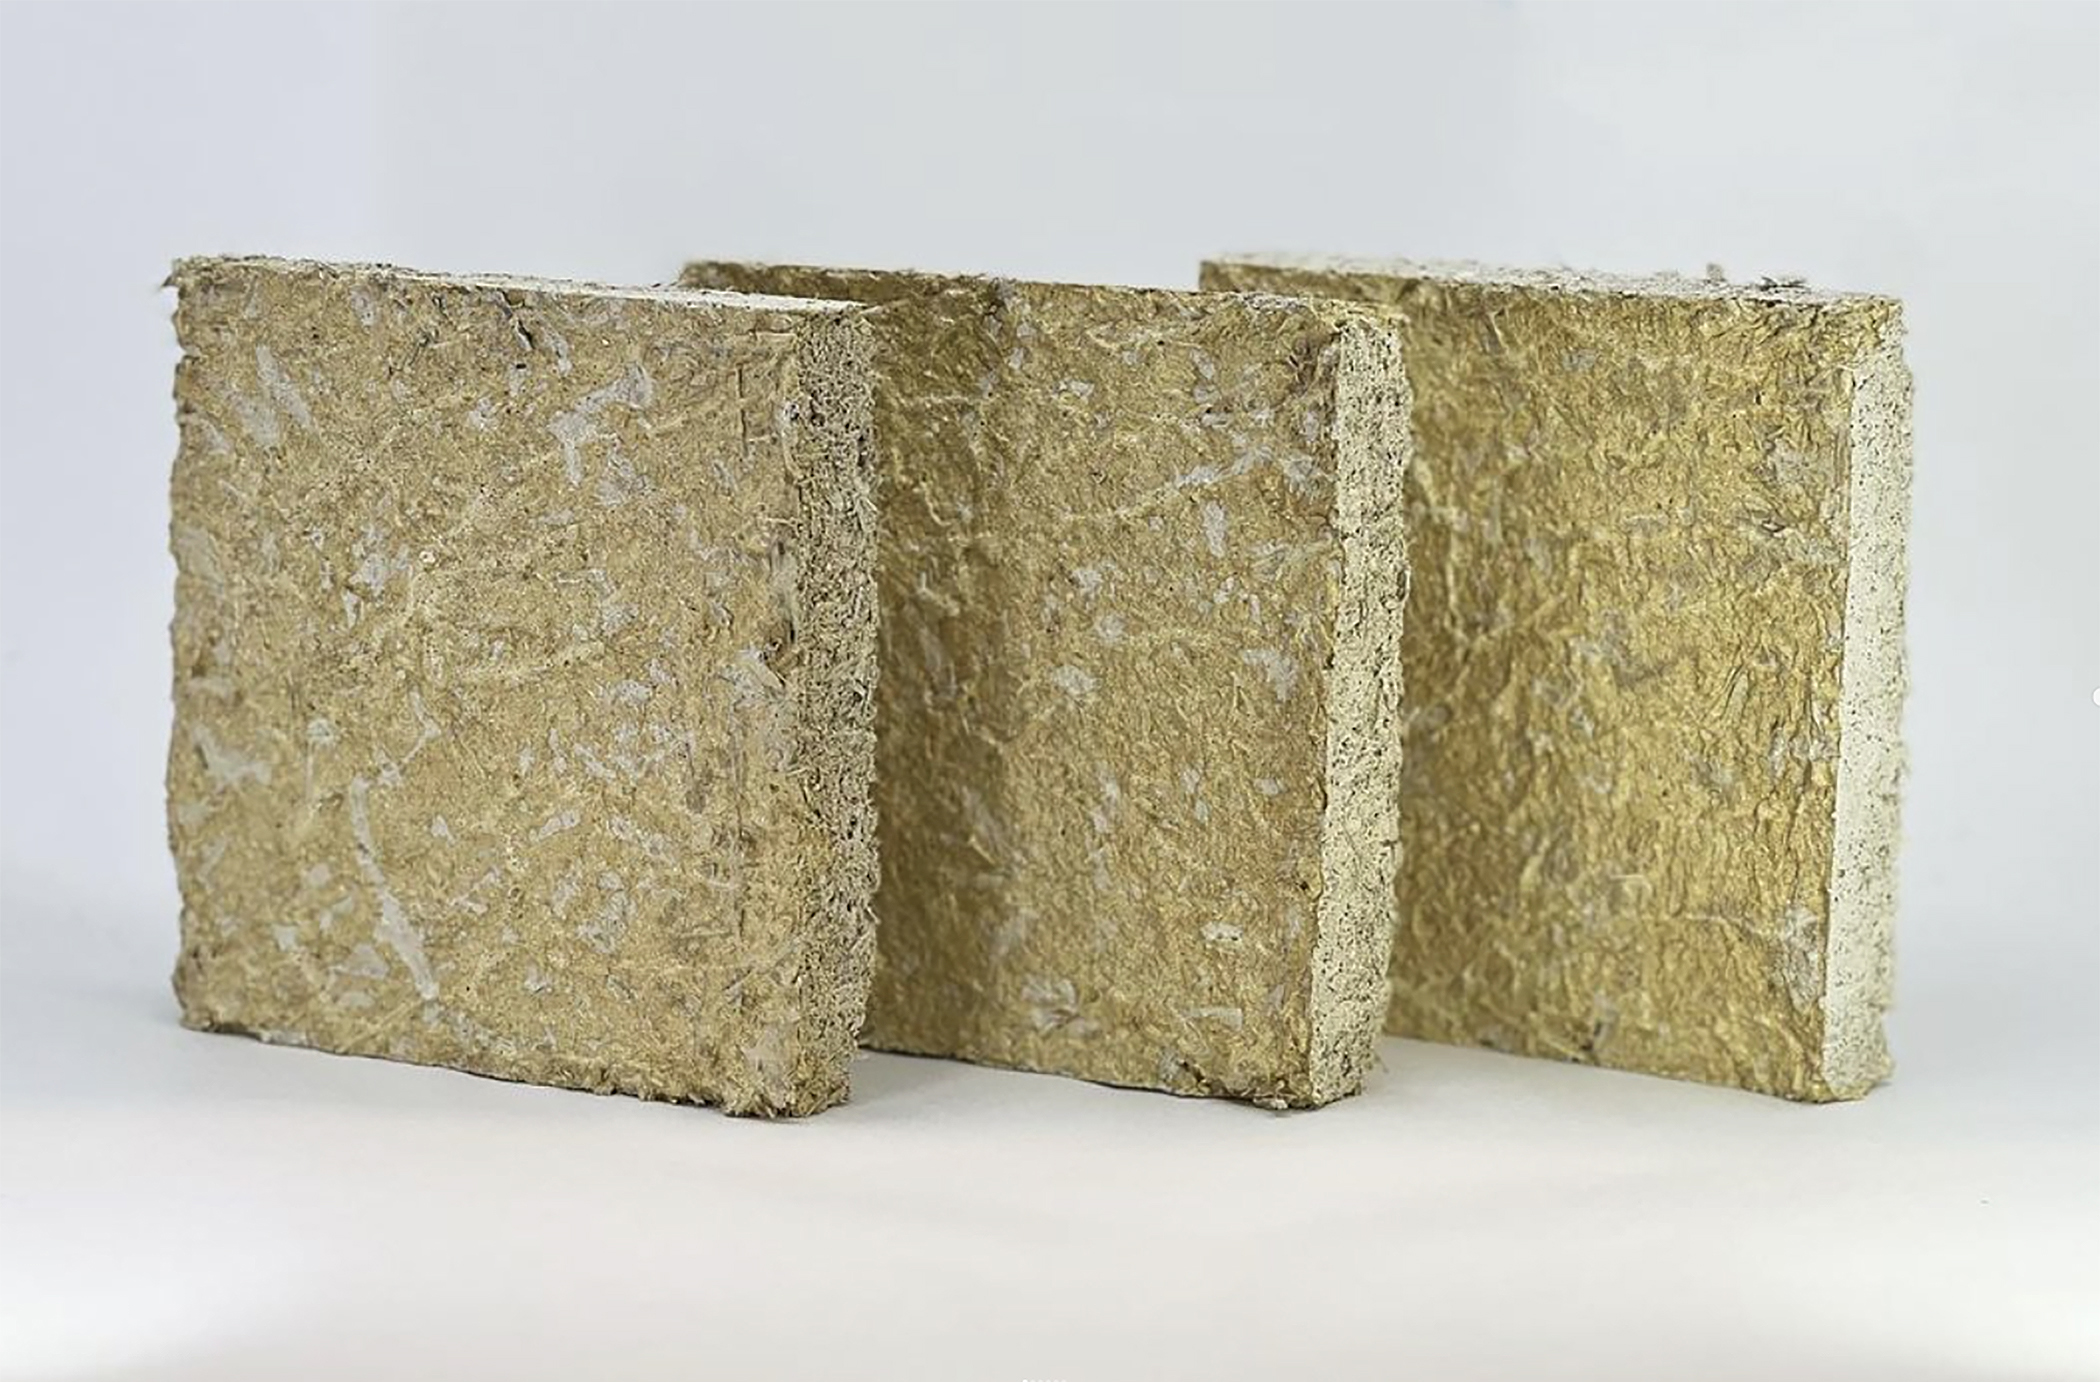 three slabs of bioconcrete made with phragmites